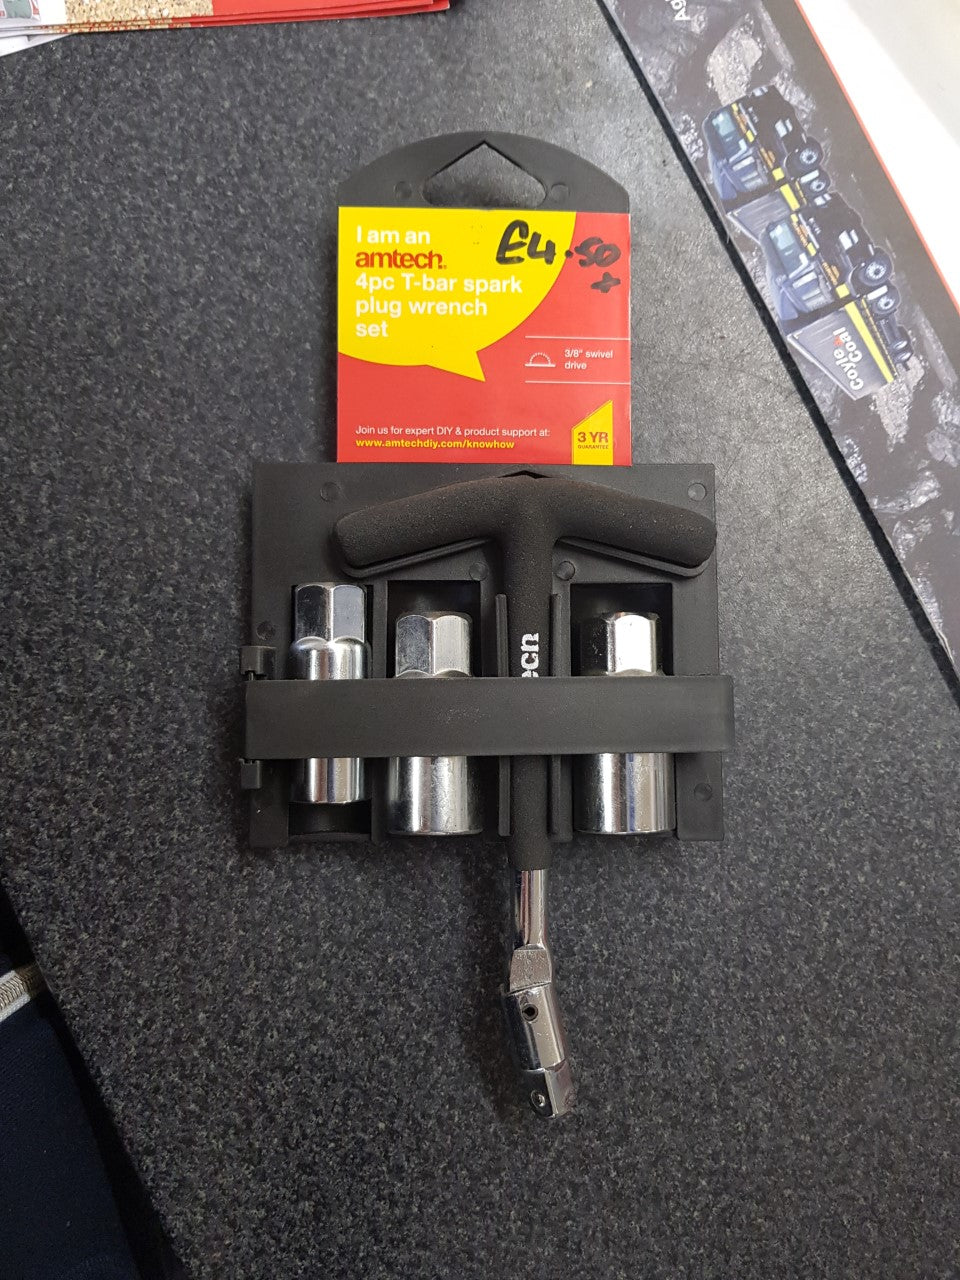 4pc T-Bar Spark Plug Wrench Set